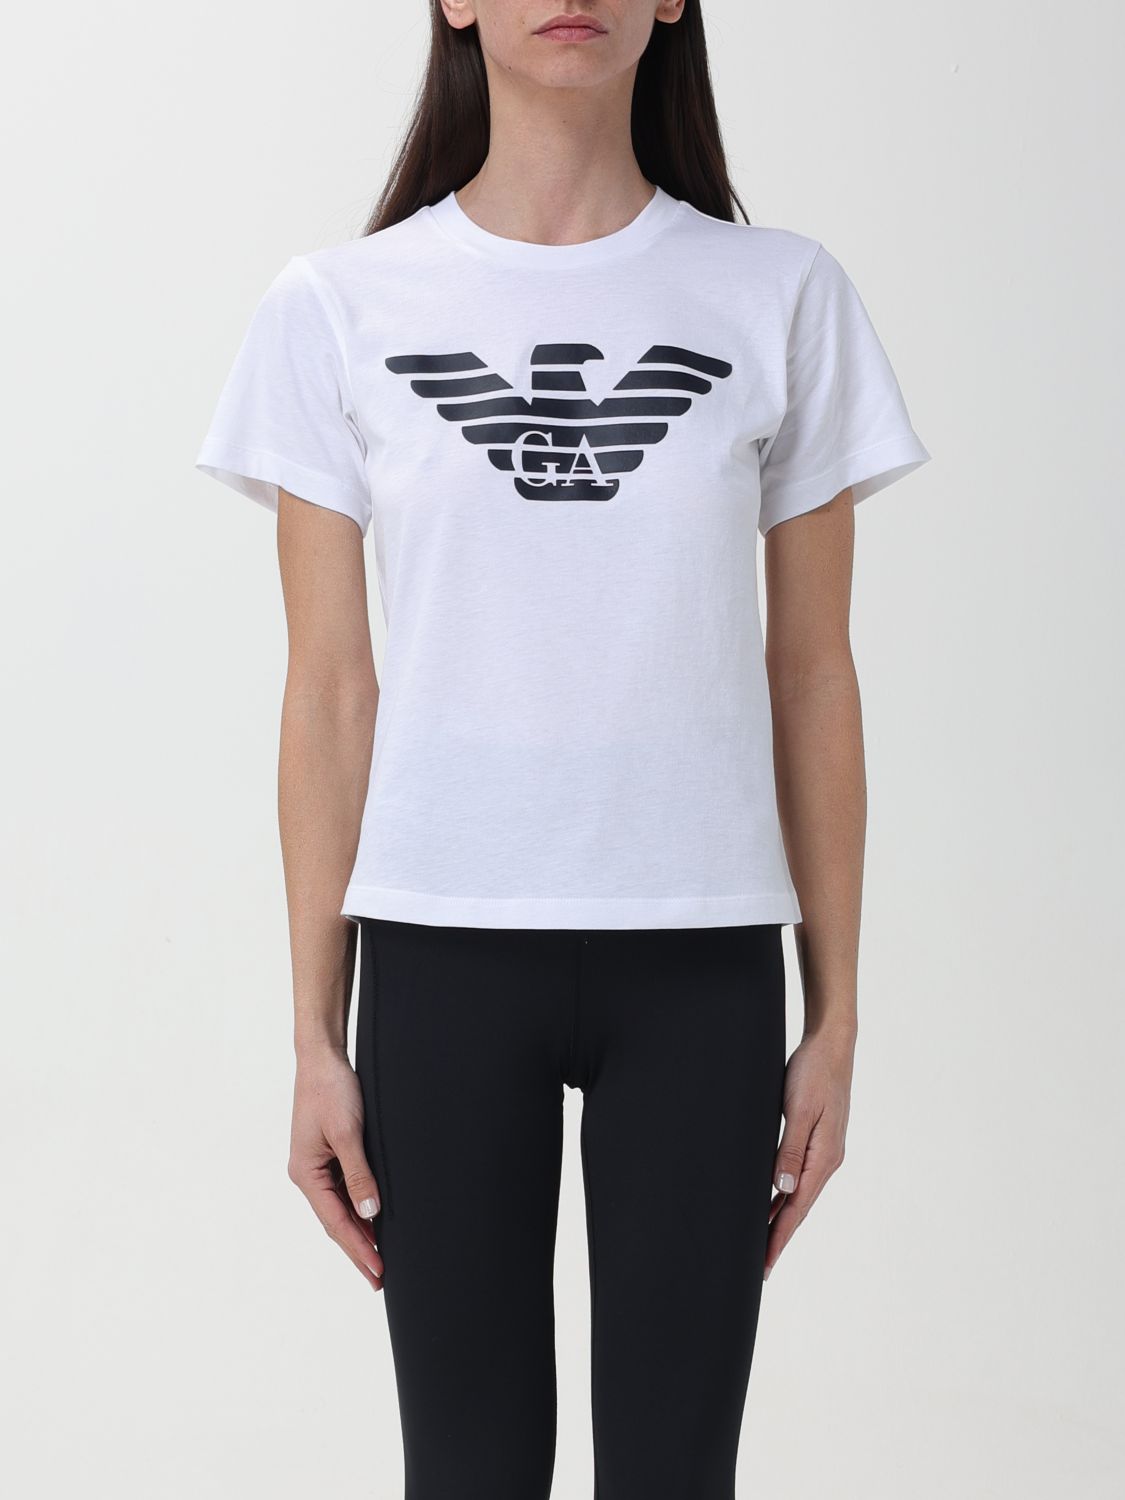 Emporio Armani T-Shirt Woman White Woman - Walmart.com